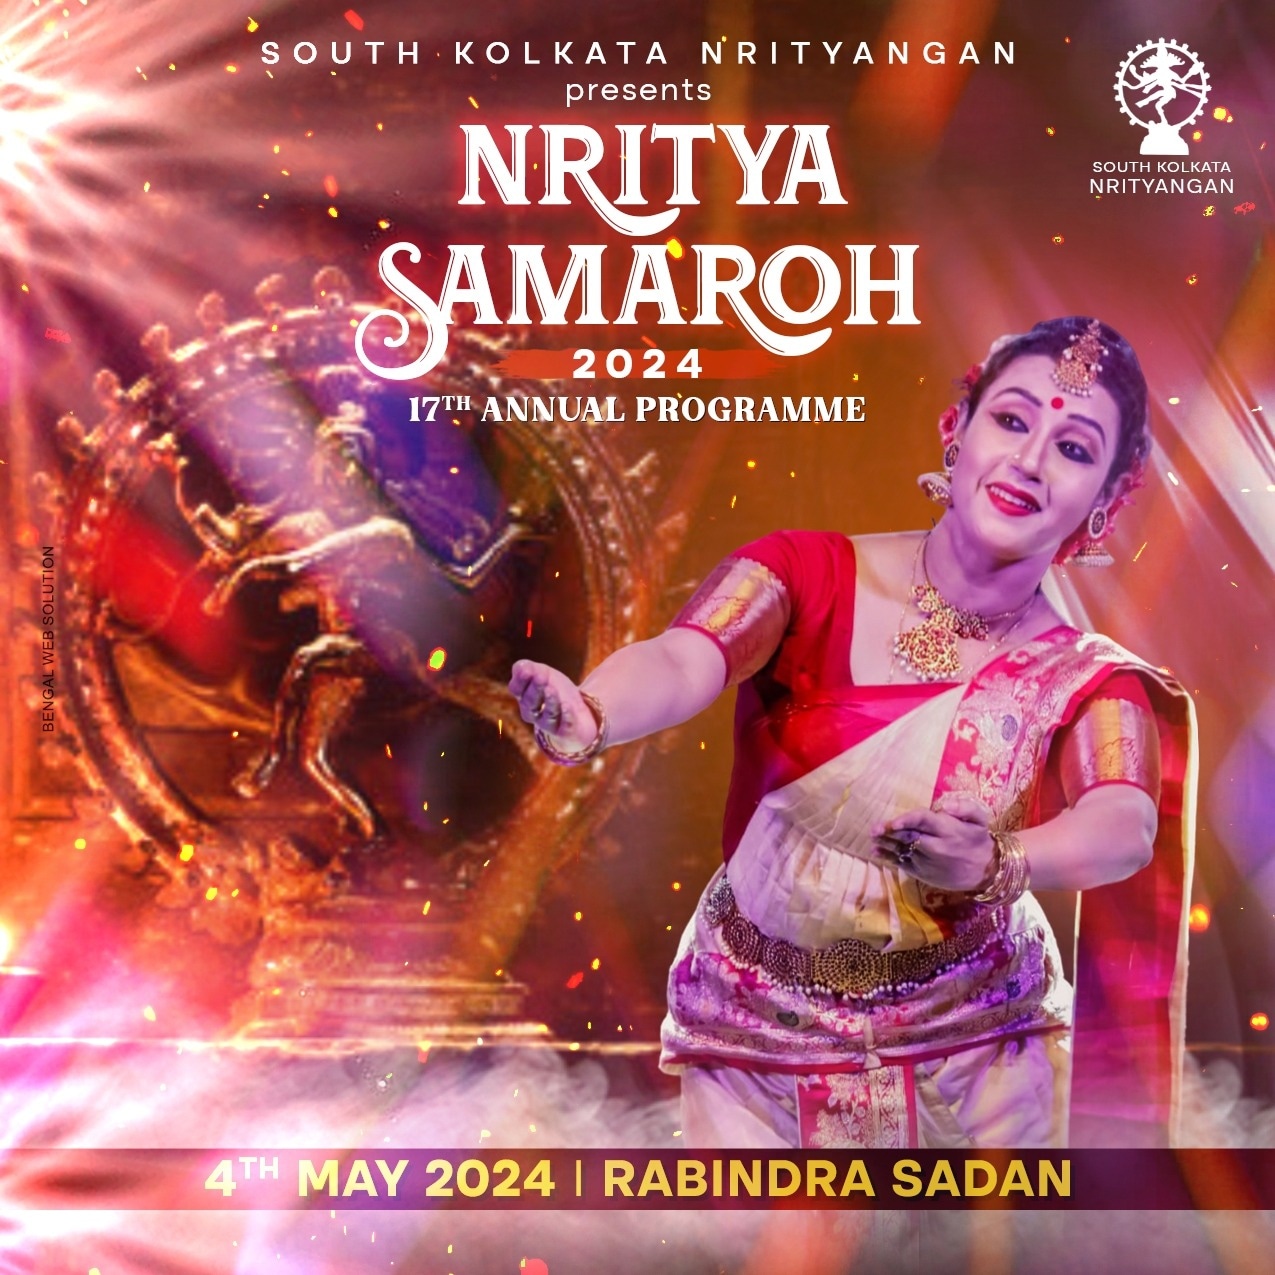 Nritya Samarah 17th Annual Program,4th May 2024, RABINDRA SADAN